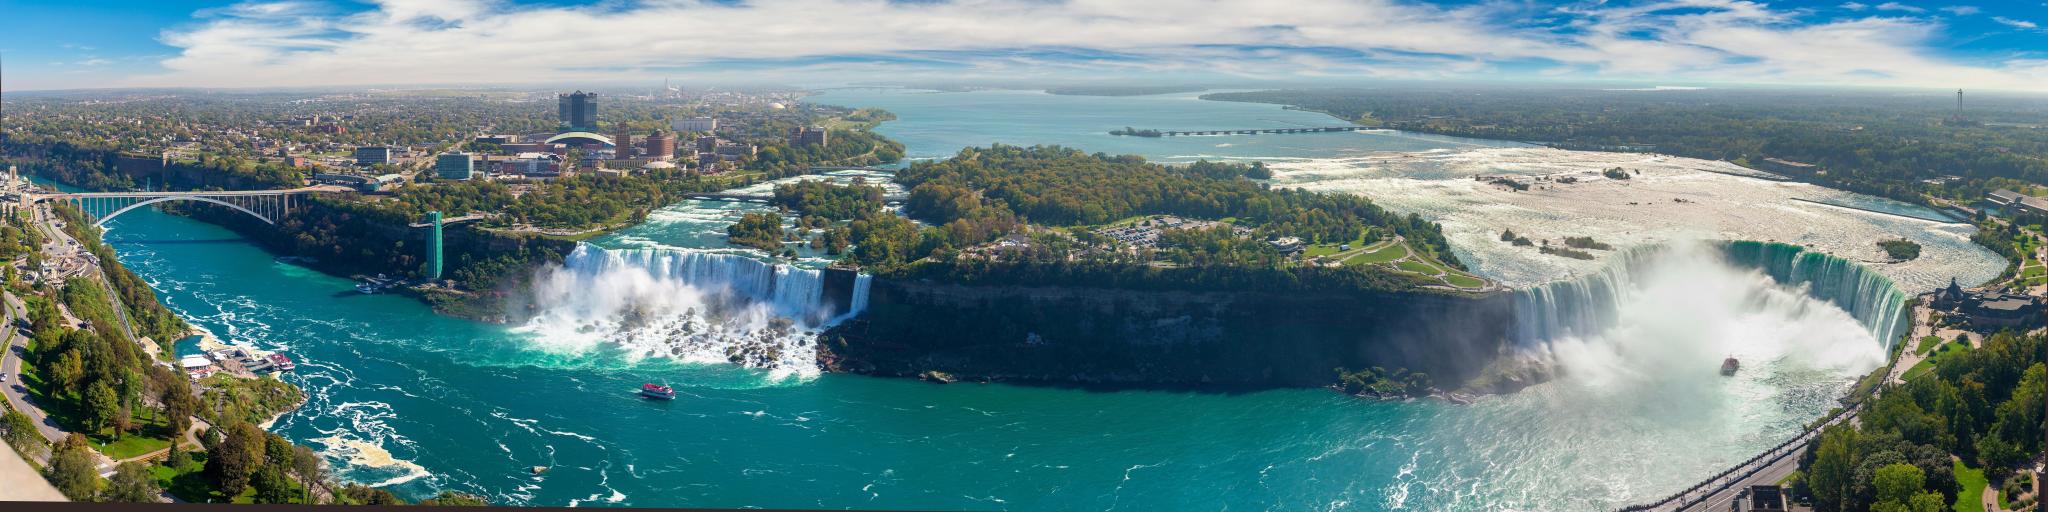 Panorama of aerial view of Canadian side view of Niagara Falls, American Falls and Horseshoe Falls in Niagara Falls, Ontario, Canada